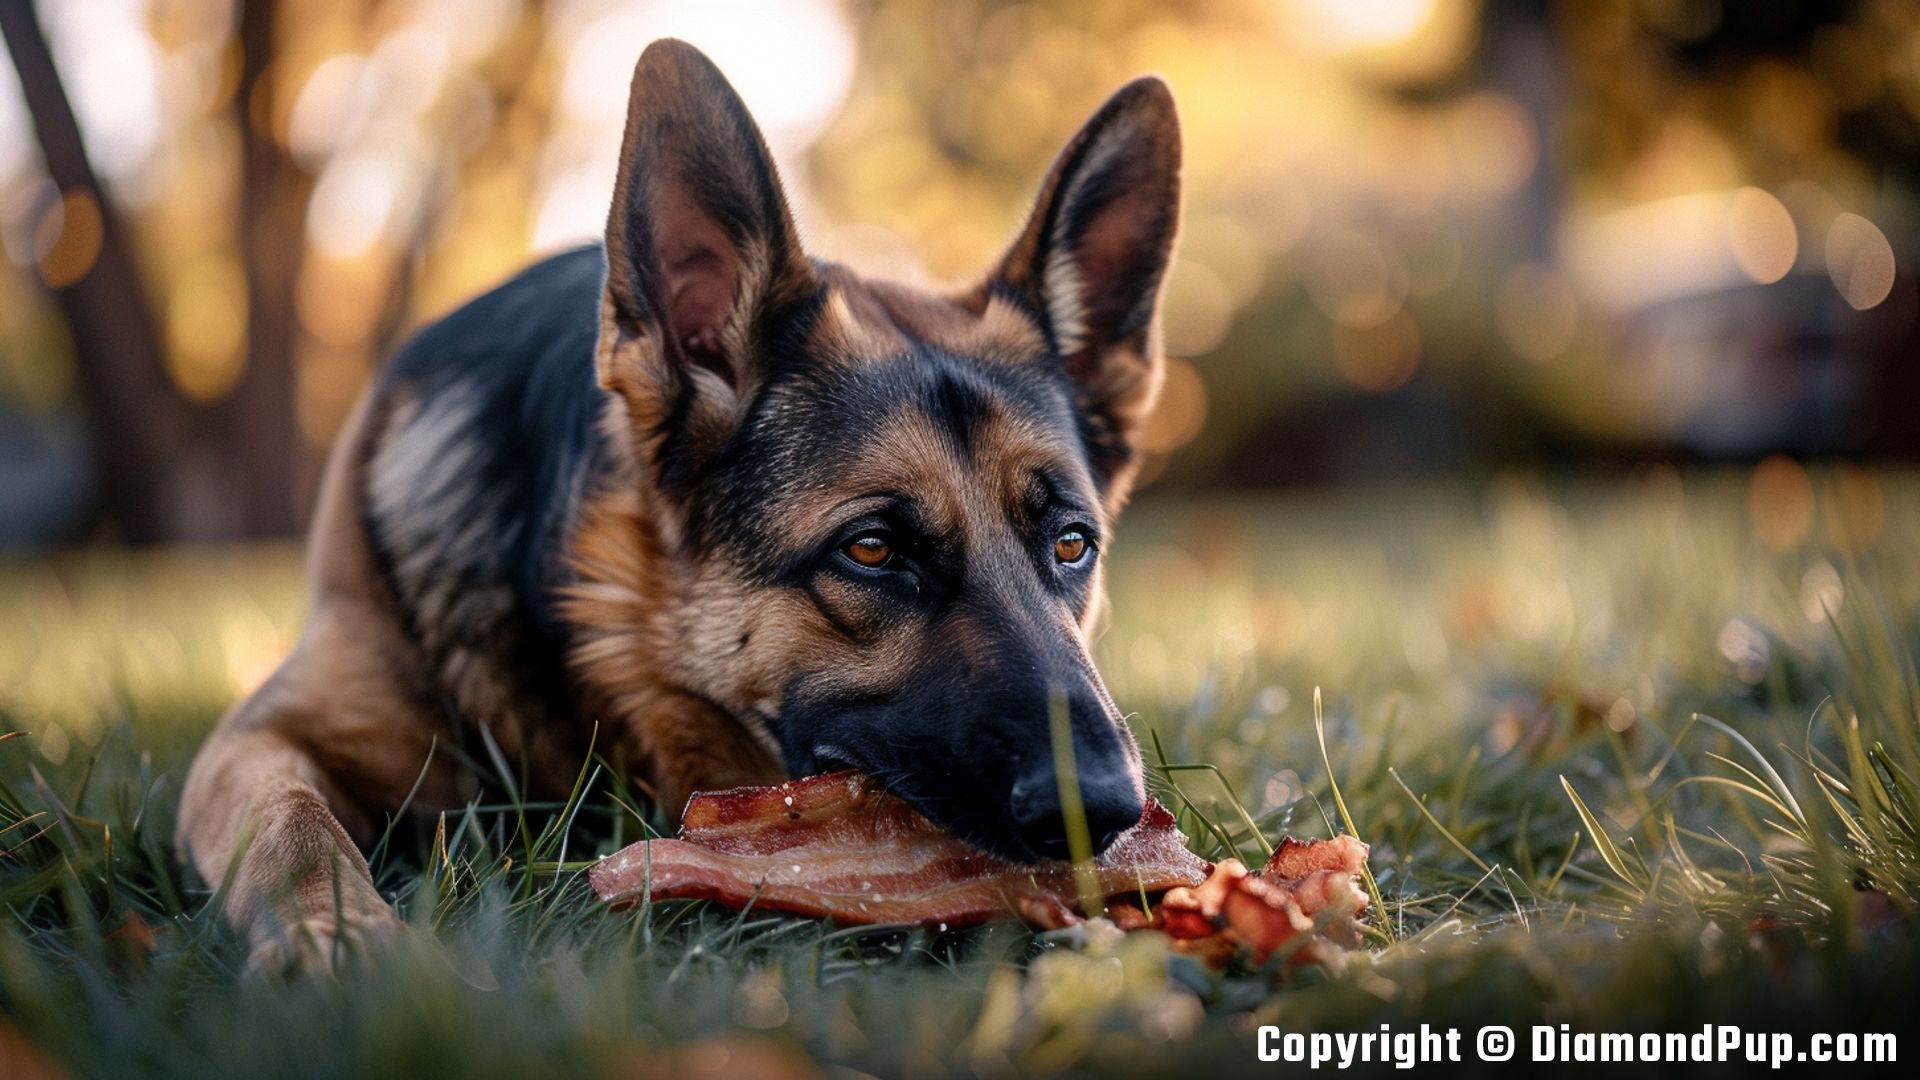 Image of a Playful German Shepherd Eating Bacon